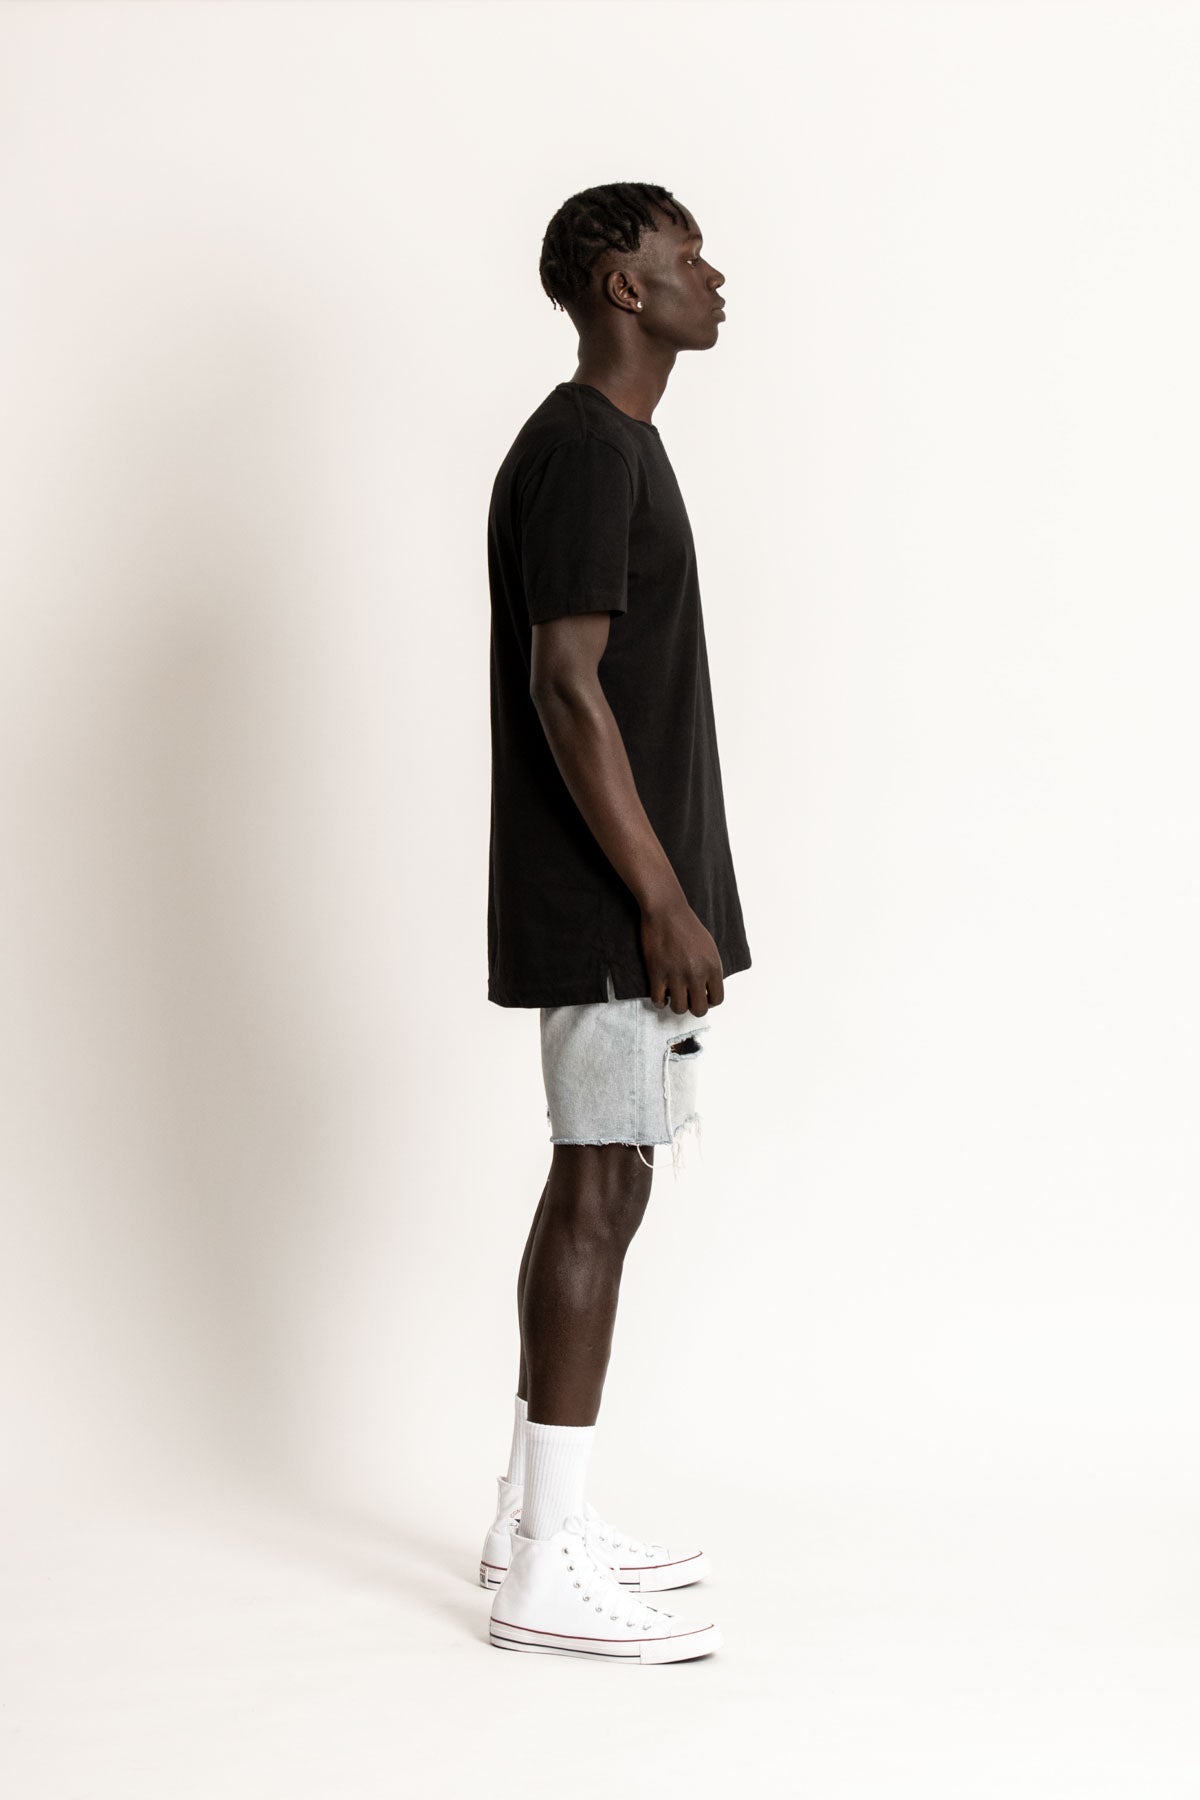 Mister Bladin Black Australian made ethical sustainable organic cotton mens tshirt tailored slim fit